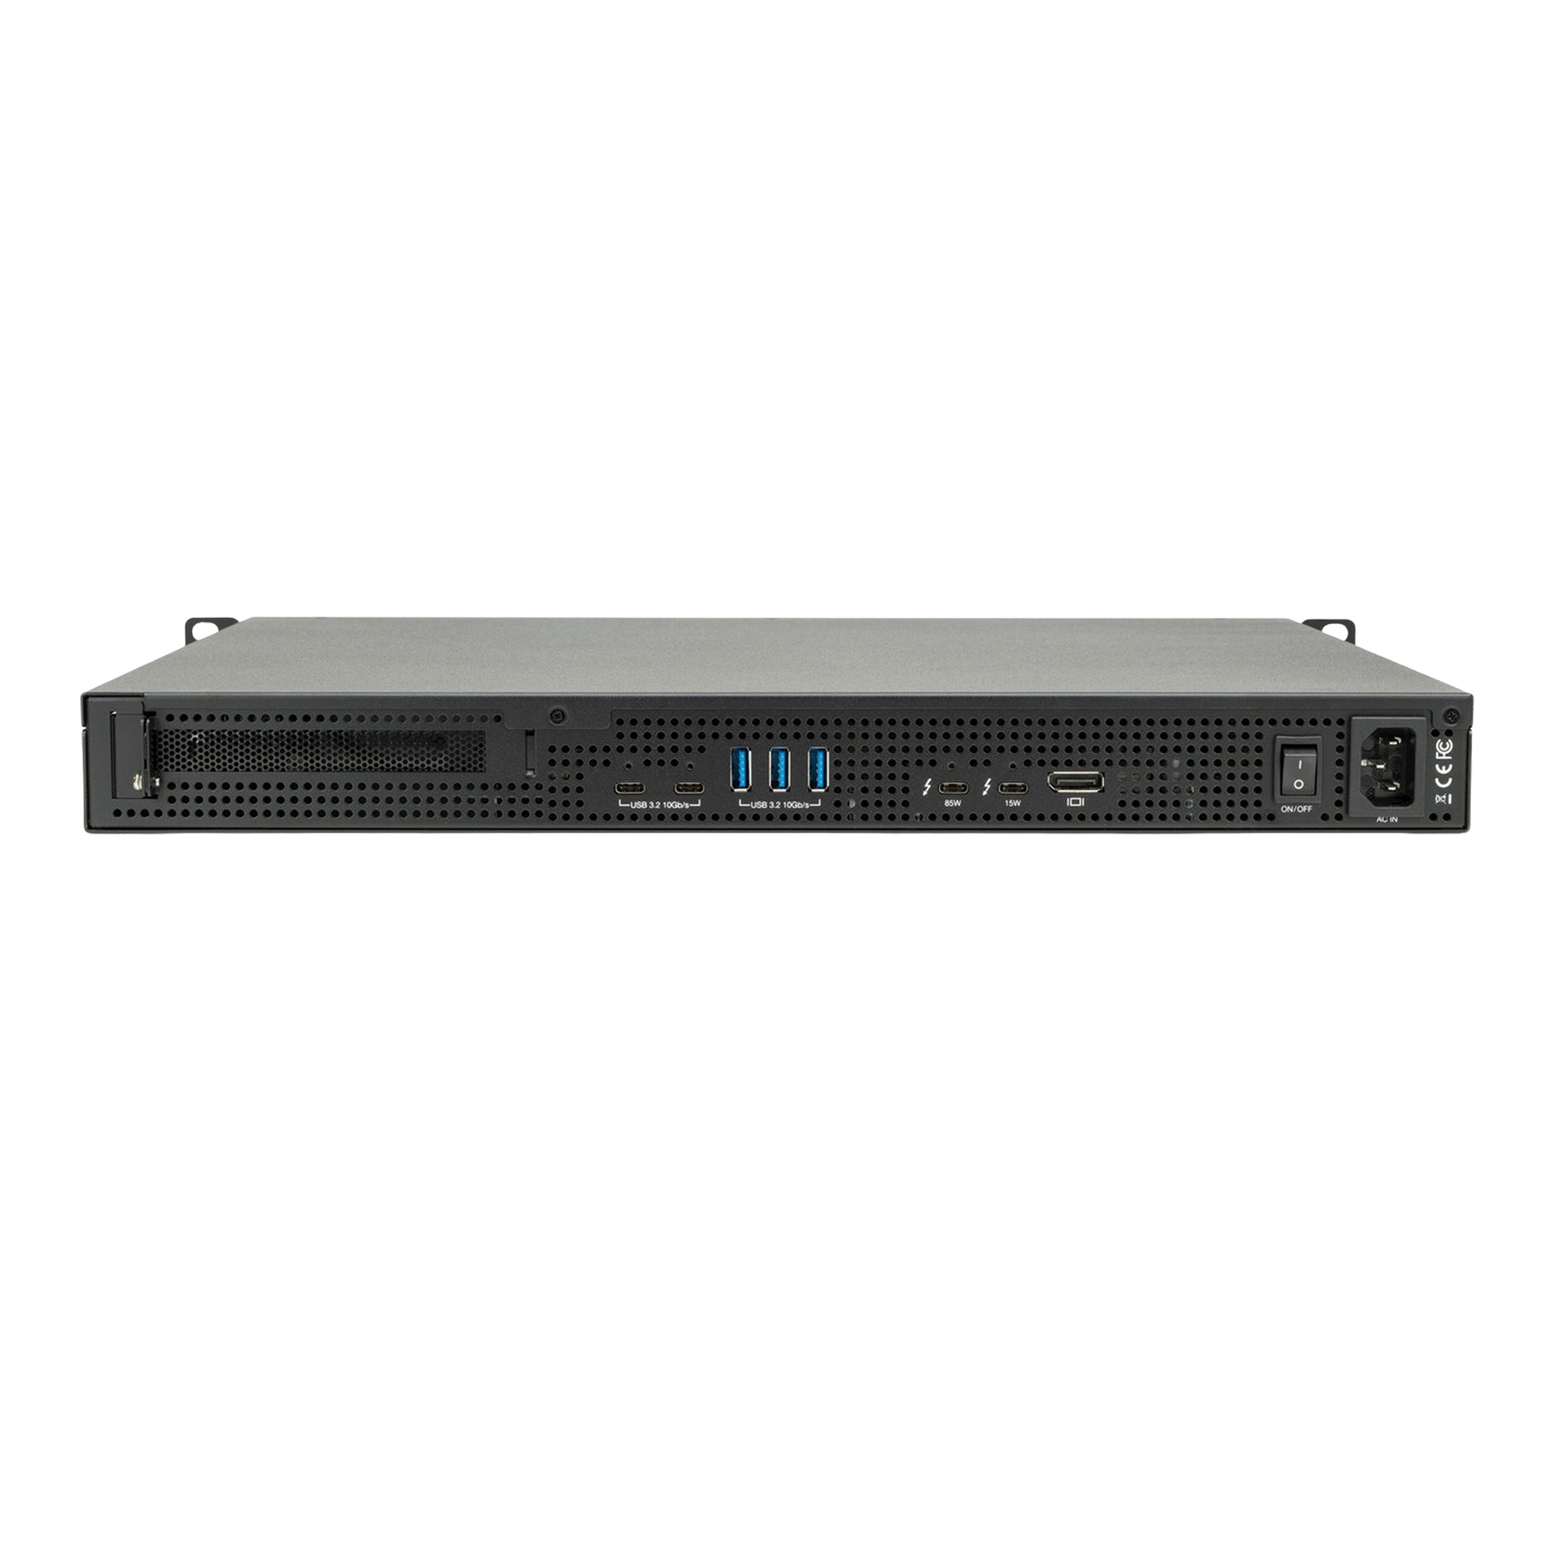 OWC 52TB (4 x 4TB NVMe + 3 x 12TB HDD) Flex 1U4 4-Bay Rackmount Thunderbolt Storage, Docking & PCIe Expansion Solution